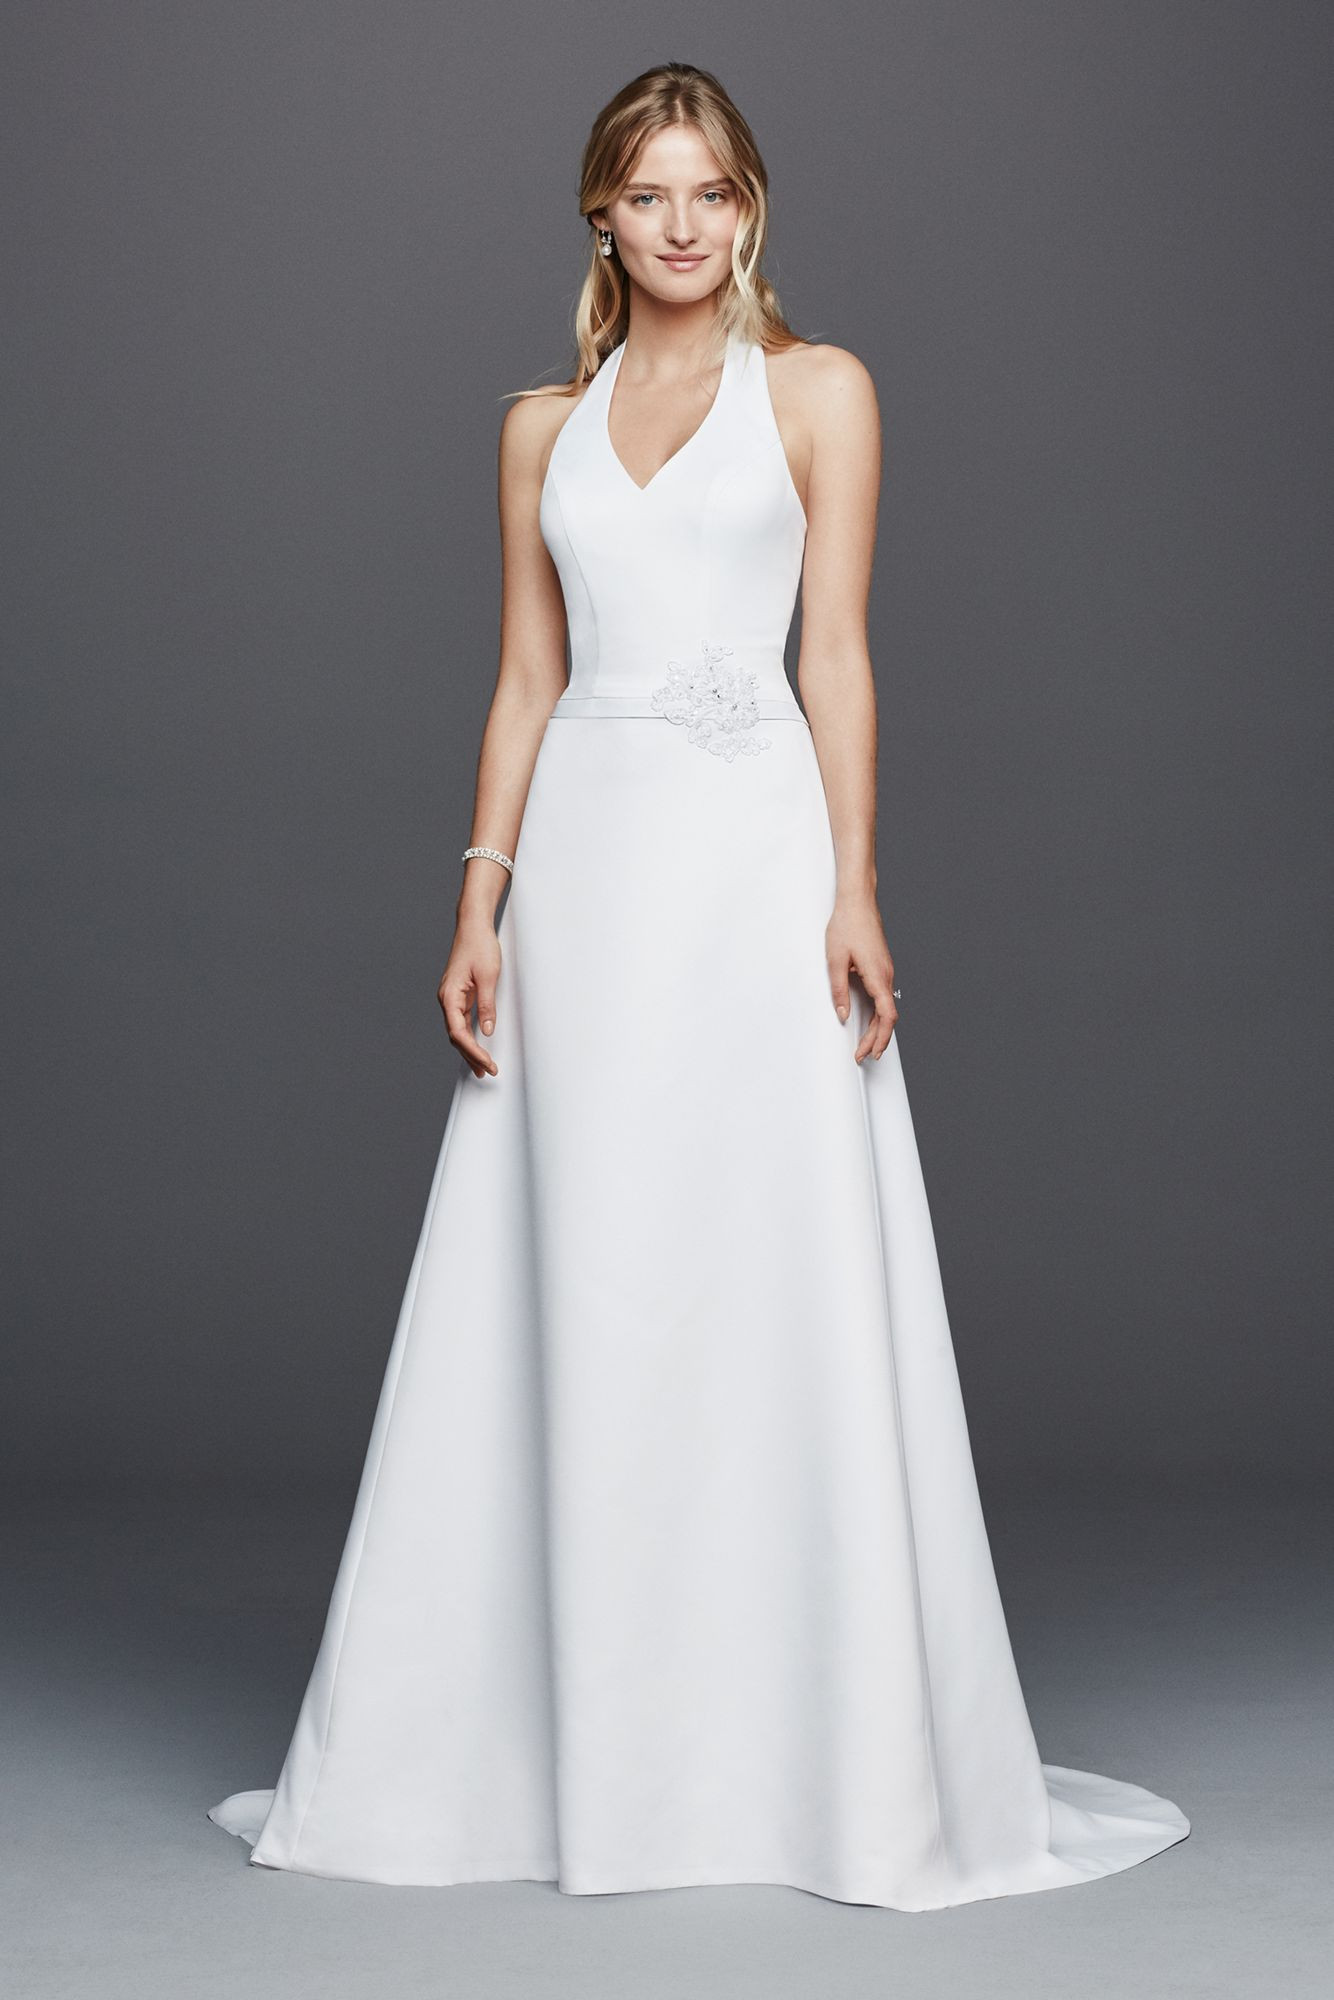 Halter Wedding Dress
 Halter V neck Wedding Dress with Flower Detail Style